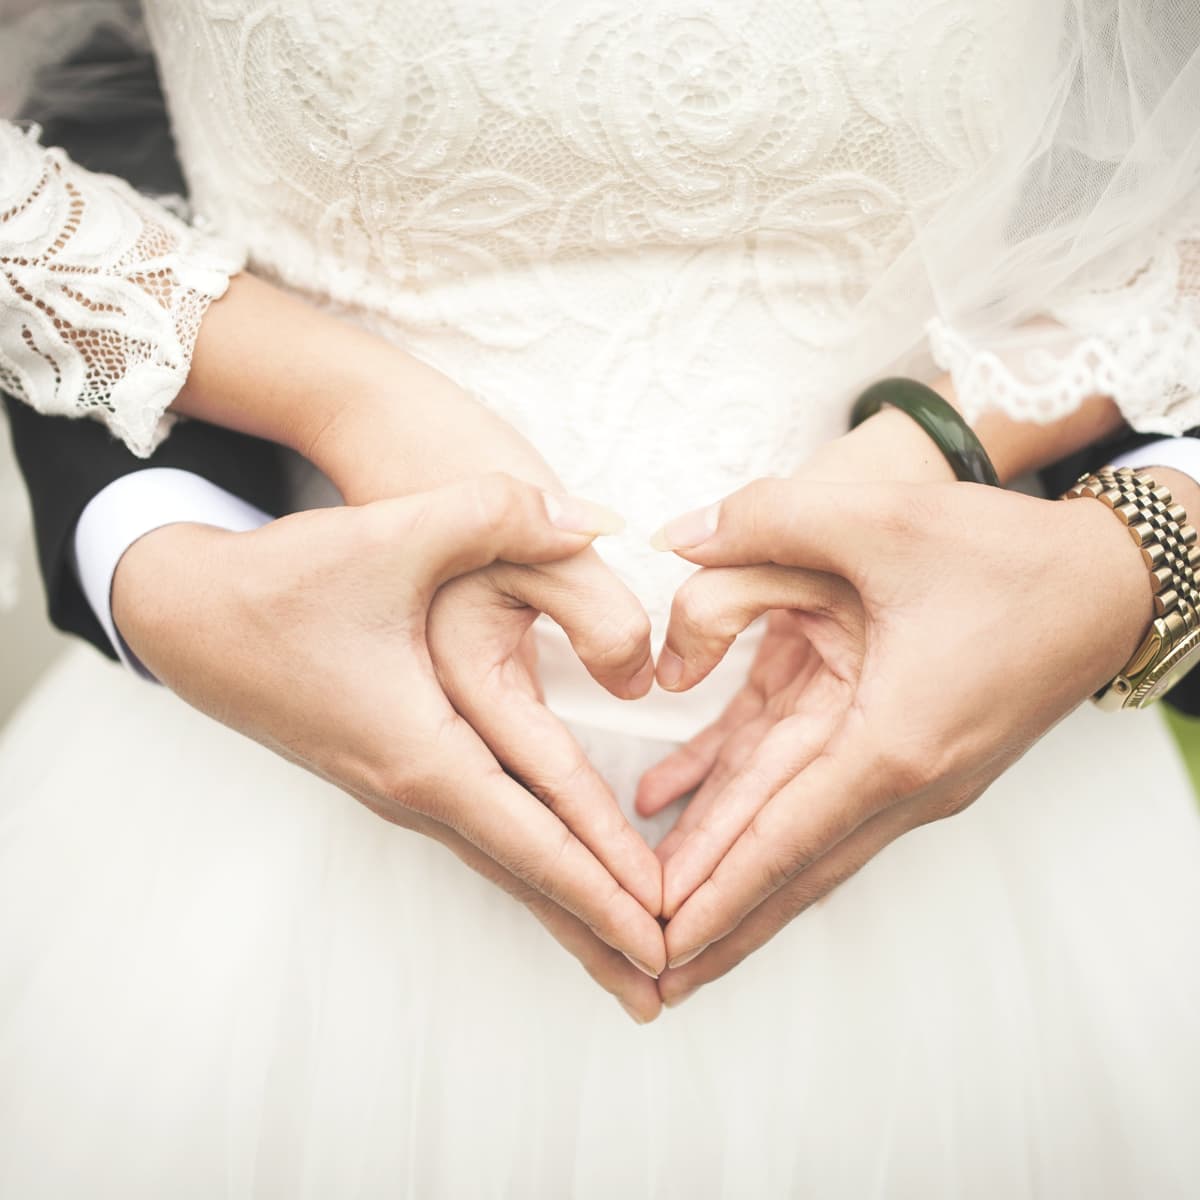 why shouldnt teens get married